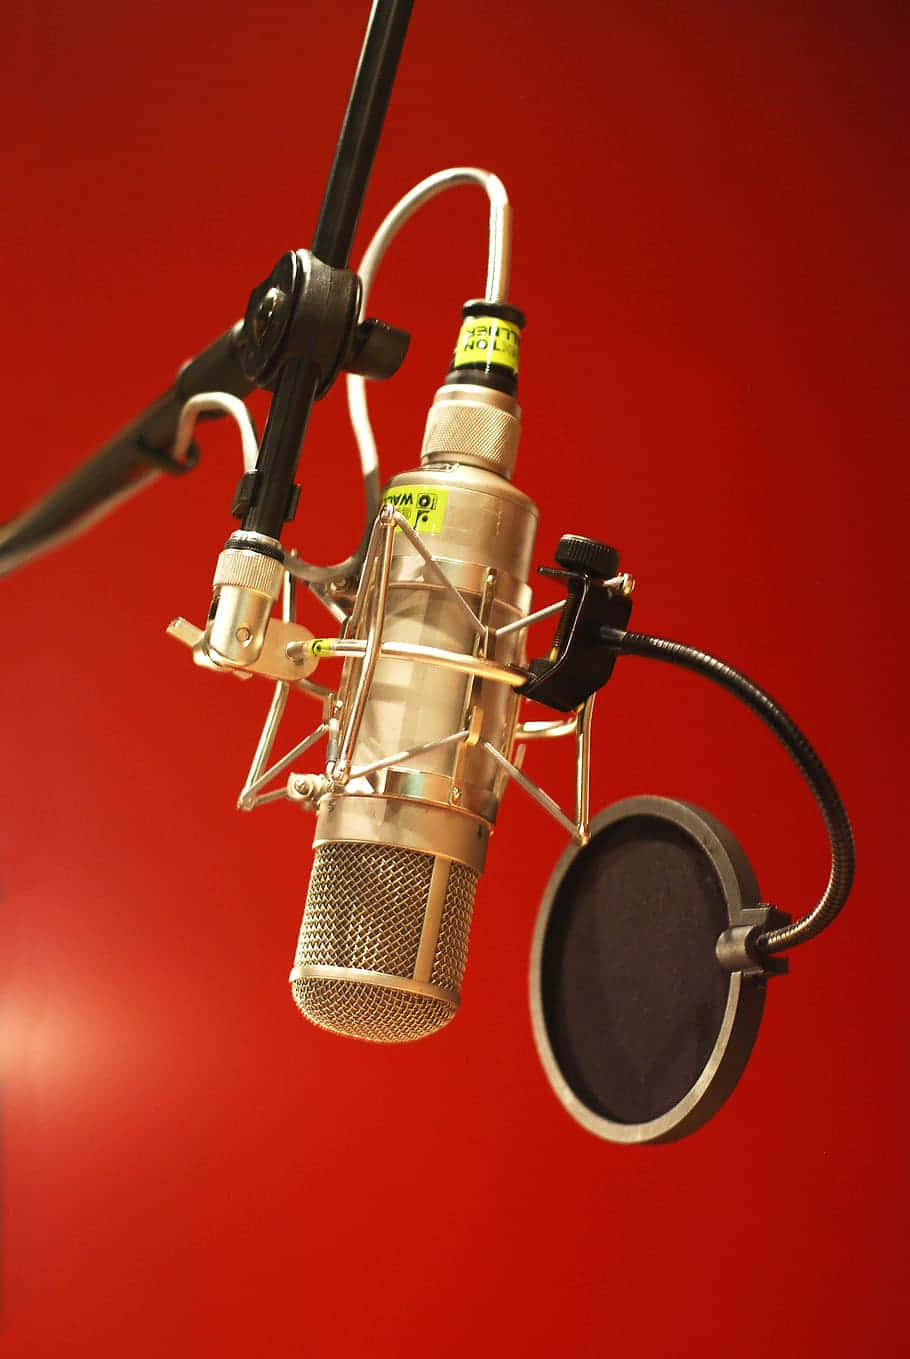 Condenser Microphone For Recording In The Studio Wallpaper